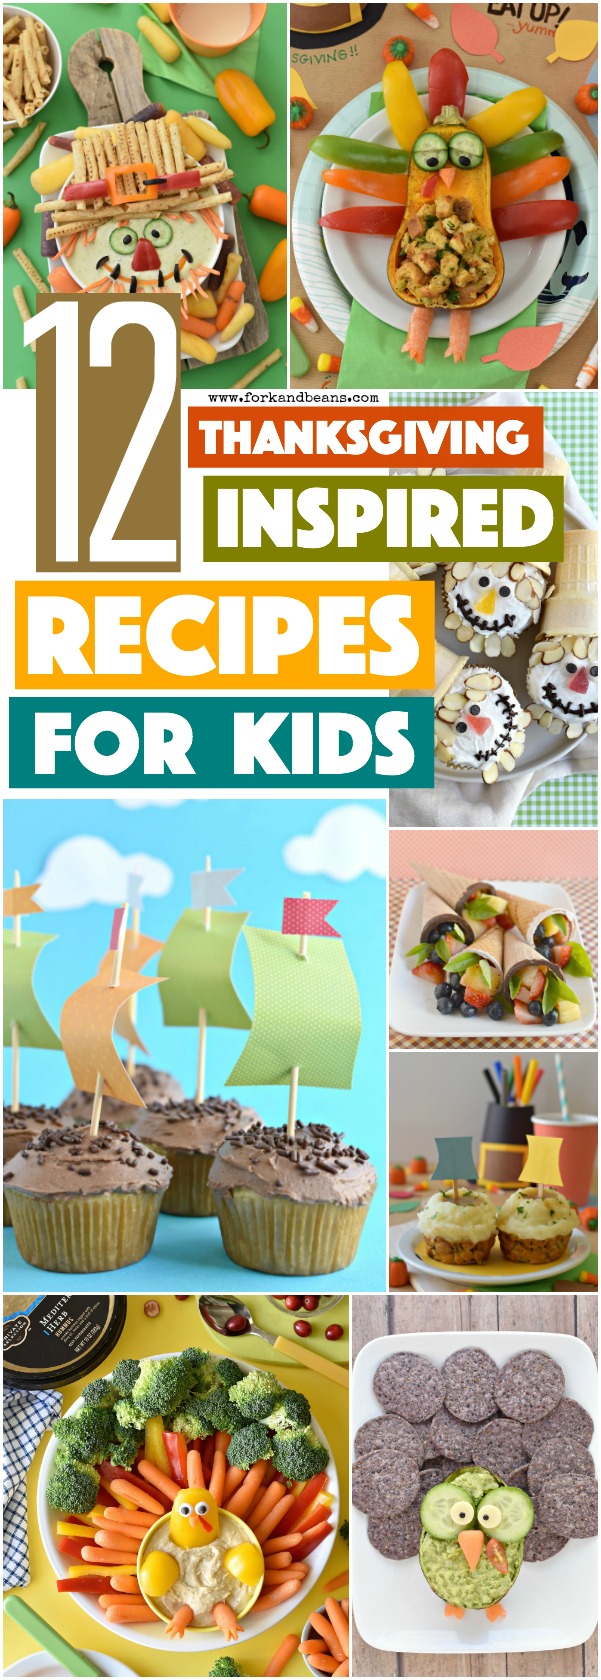 12 Thanksgiving Kid Recipes